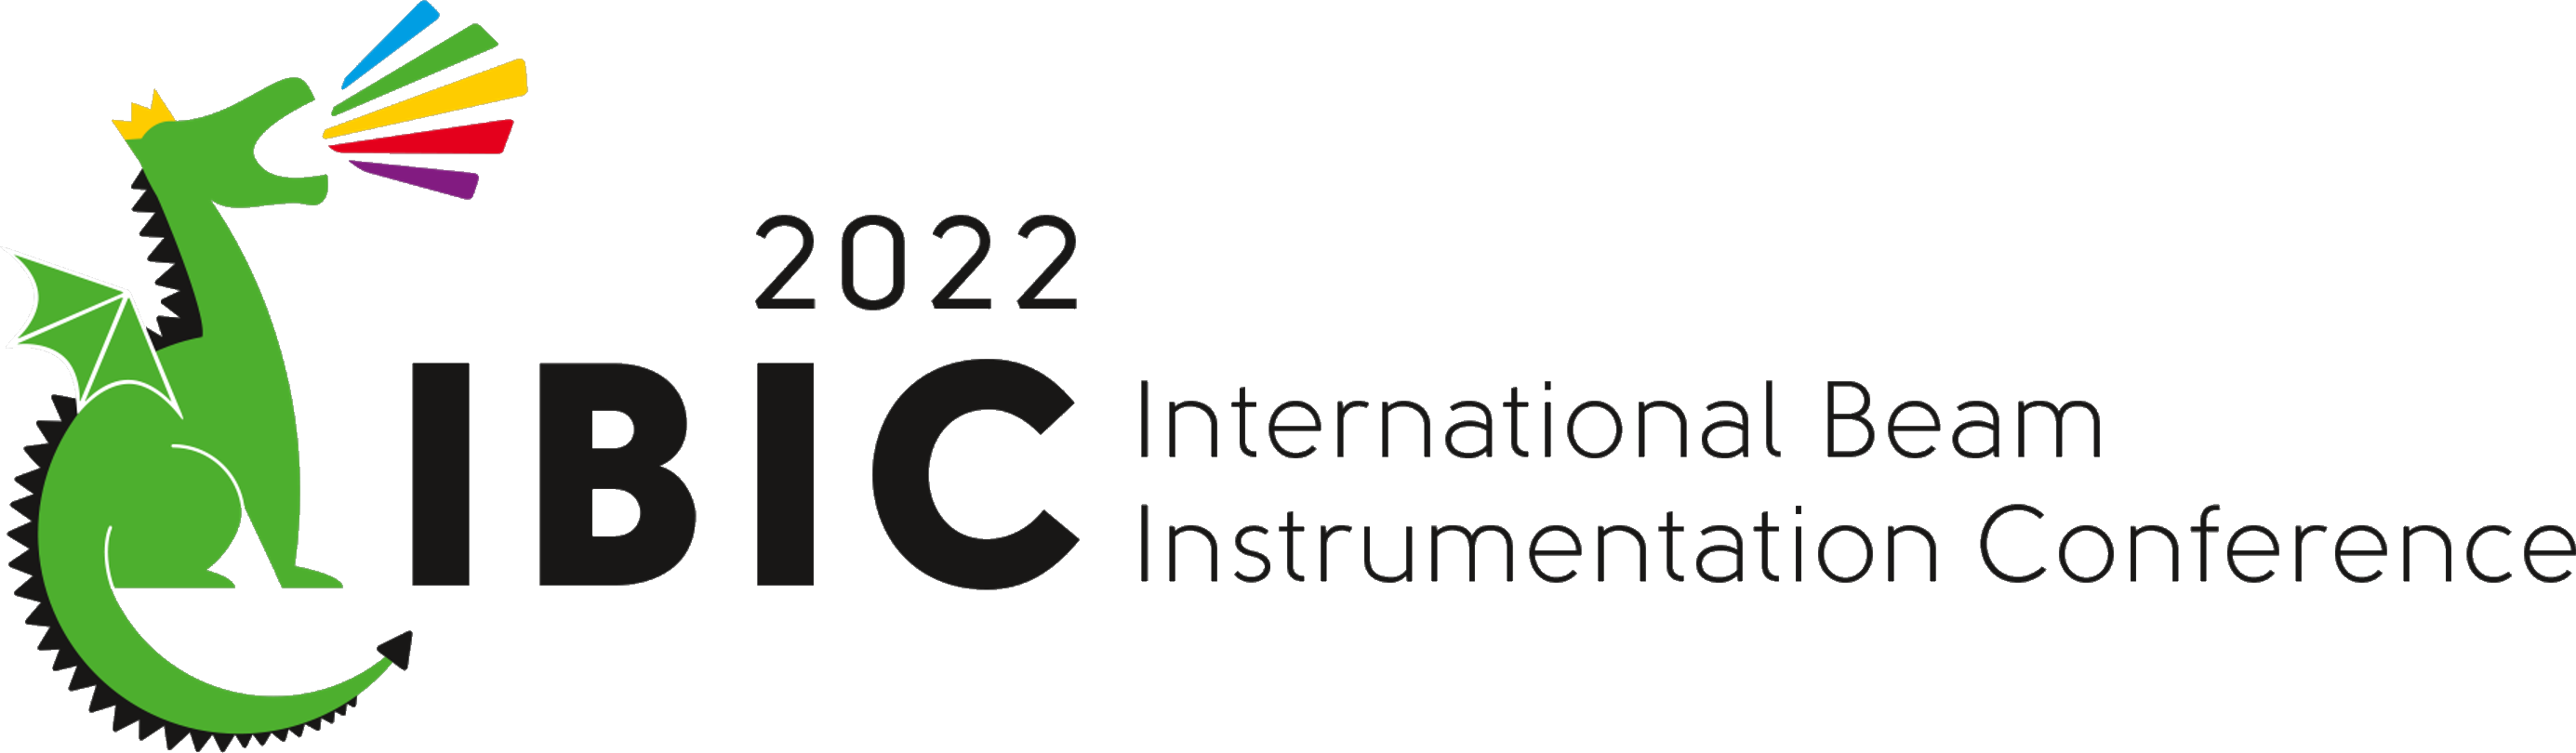 conference logo icon